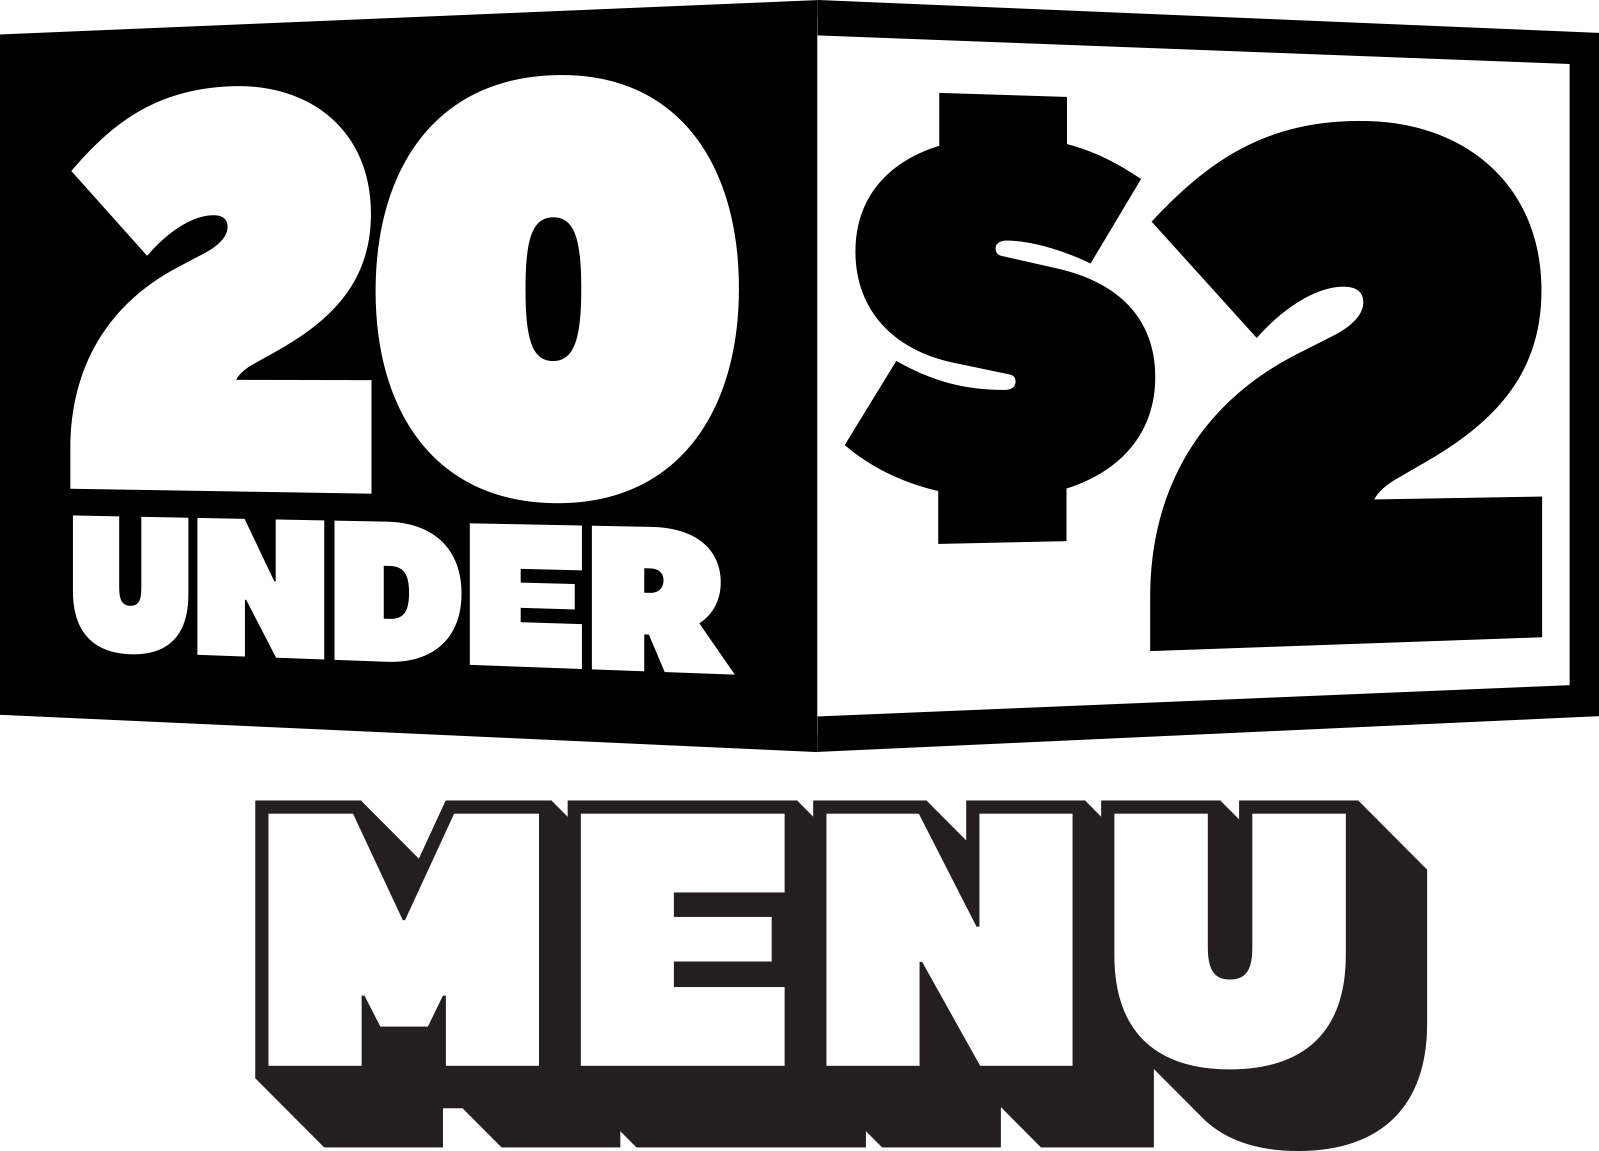 New 20 Under $2 Menu